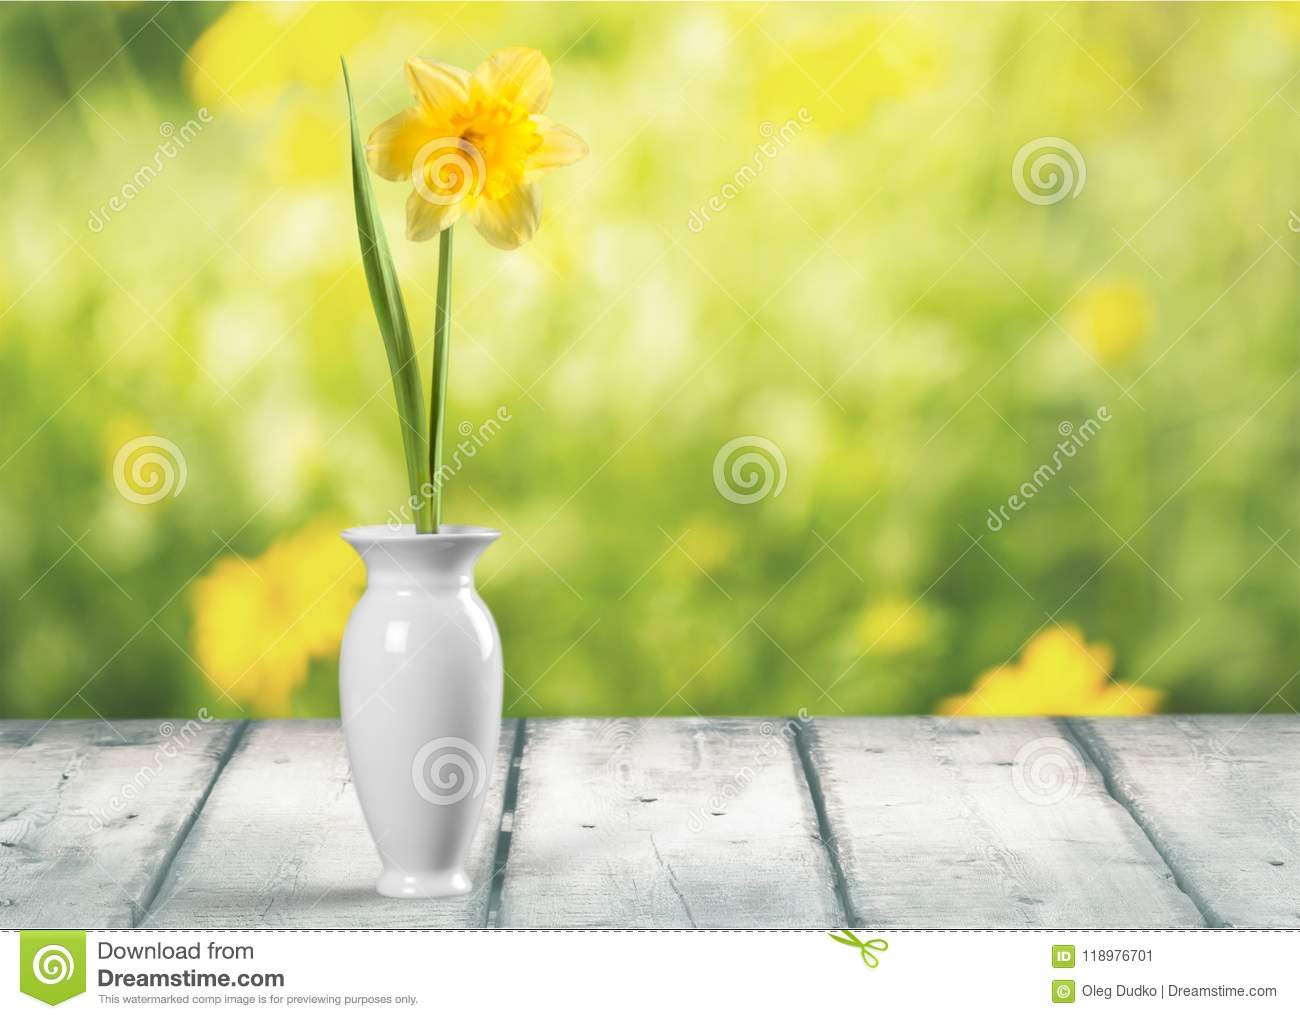 19 Amazing Gerbera Daisy In Vase 2024 free download gerbera daisy in vase of vase stock image image of green spring window gerbera 118976701 within download vase stock image image of green spring window gerbera 118976701